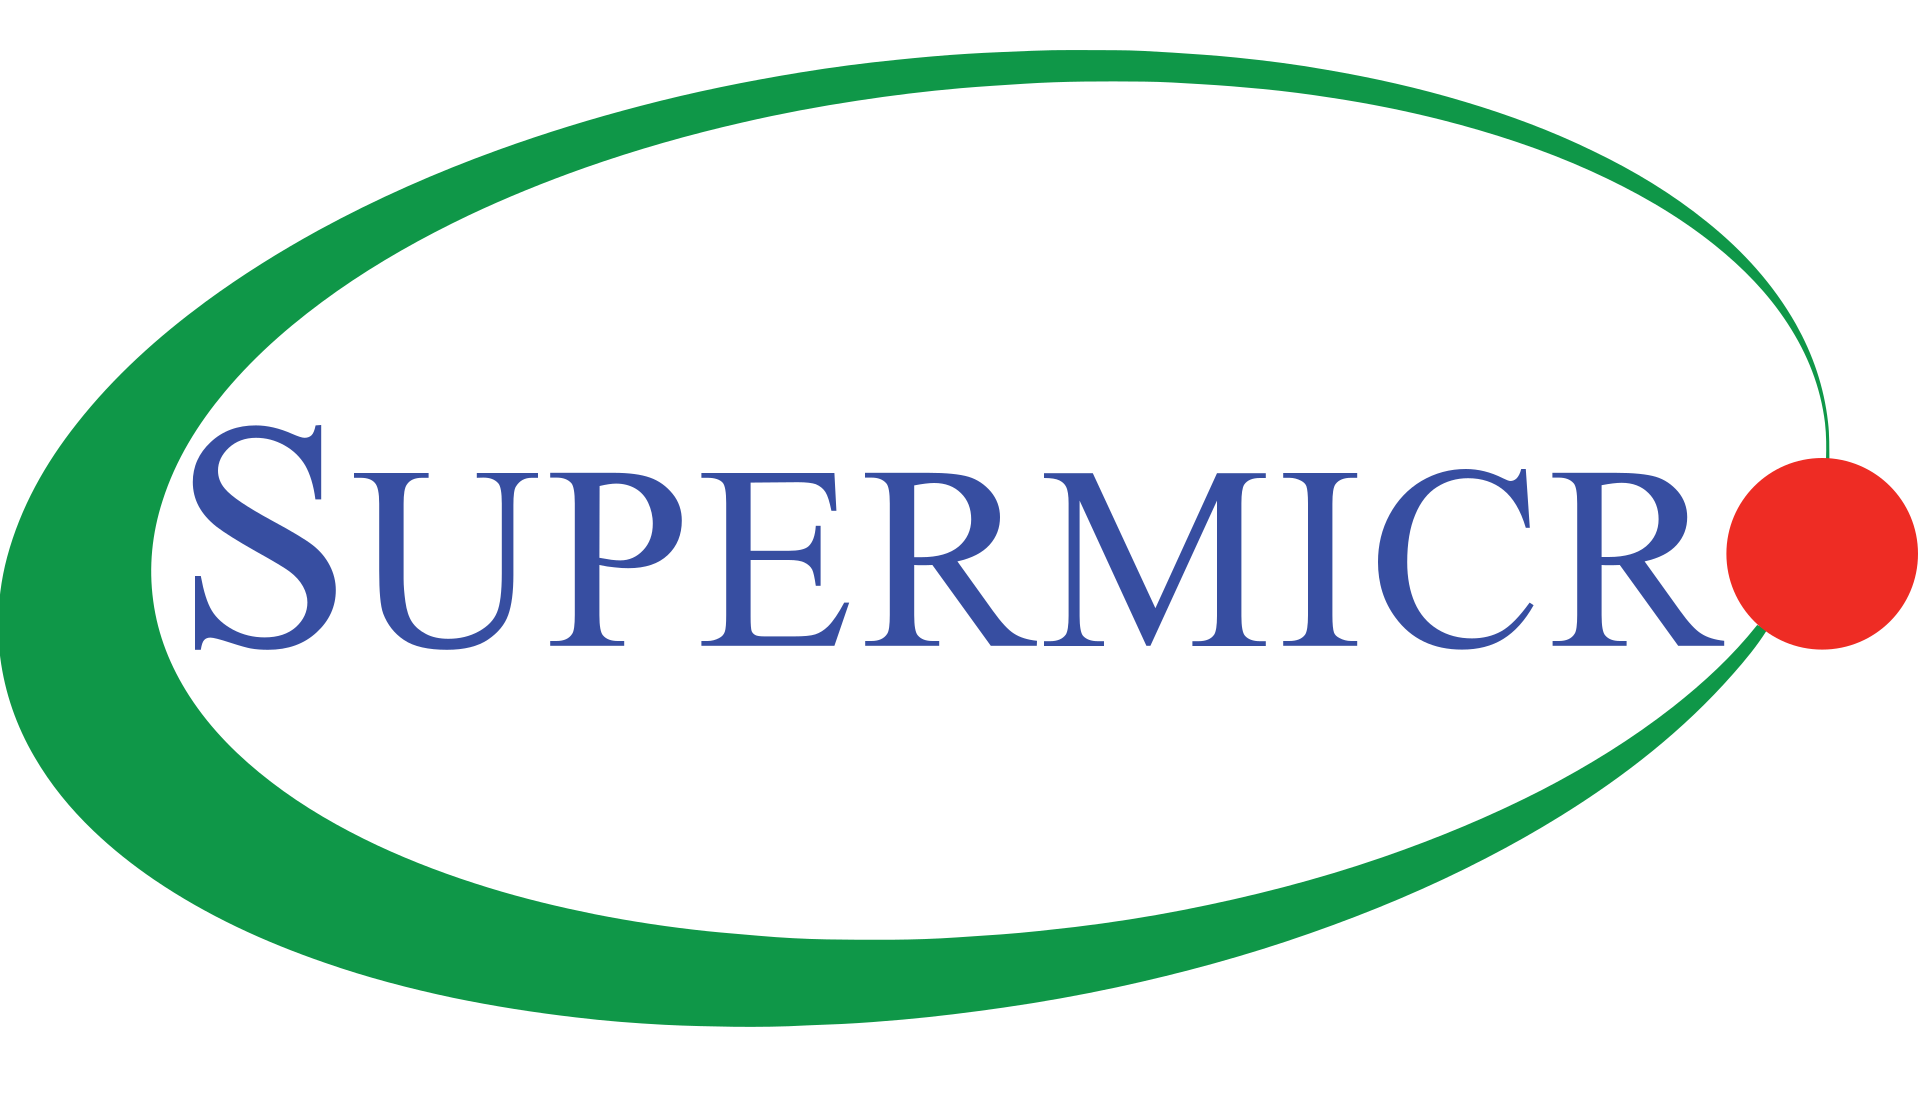 Supermicro Logo Image